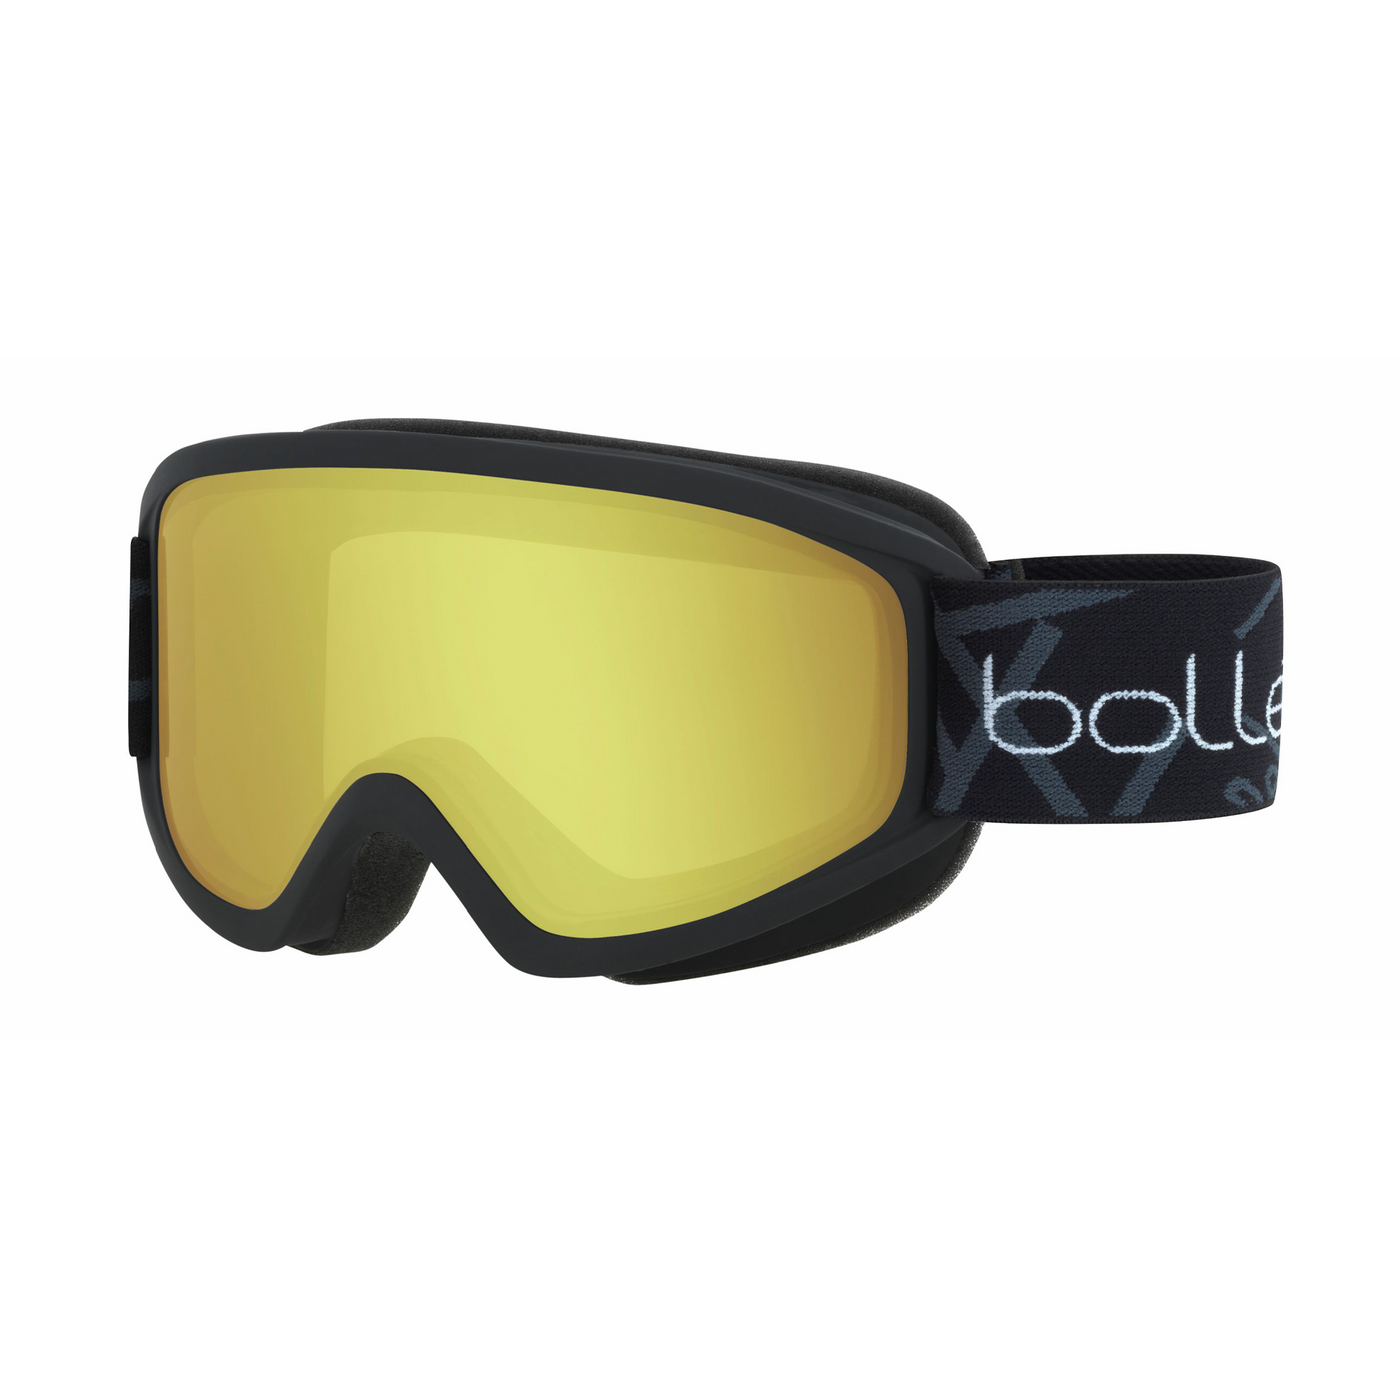 Bollé Freeze Ski Goggles - DISCONTINUED GOGGLES Bolle Matte Black with Lemon Lens  